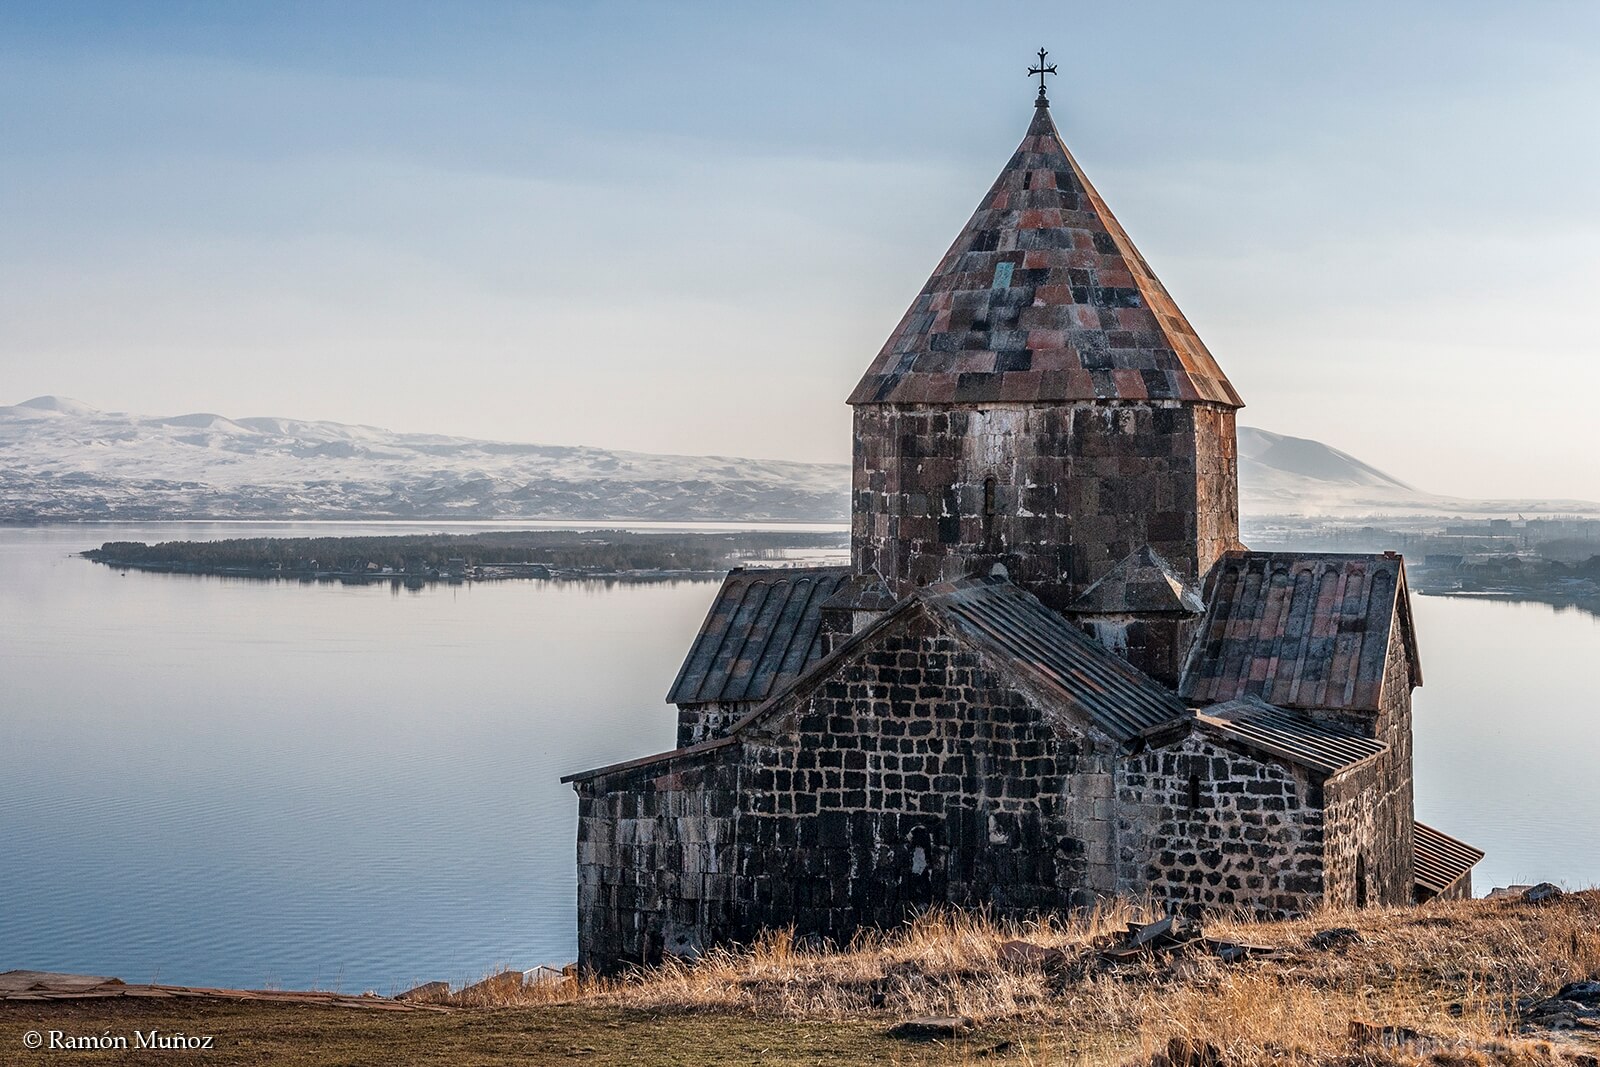 Armenia photo locations